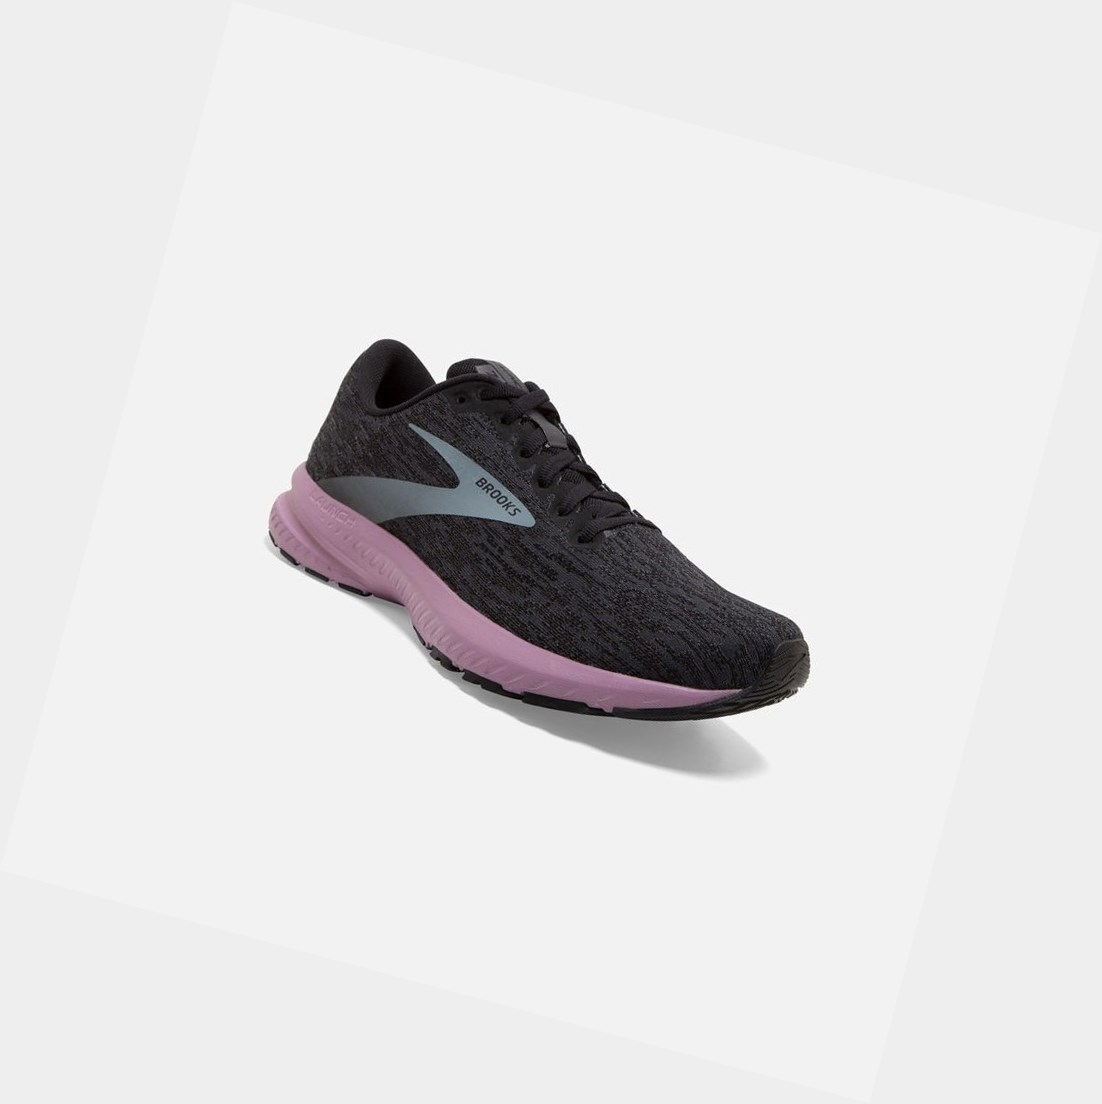 Brooks Launch 7 Women's Road Running Shoes Black / Ebony / Valerian | AZTD-41957